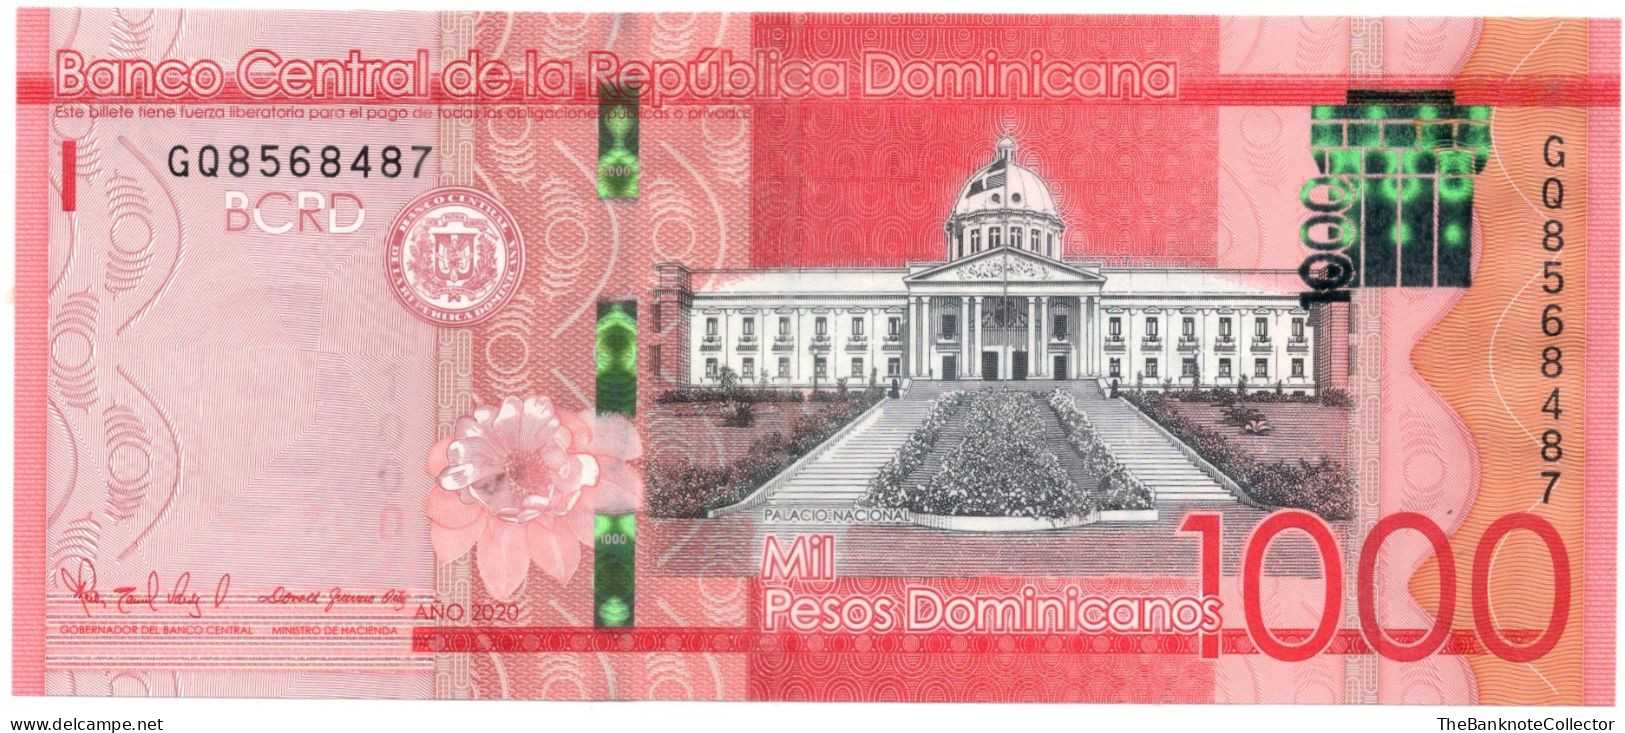 Dominican Republic 1000 Pesos 2019 P-193 UNC - Repubblica Dominicana